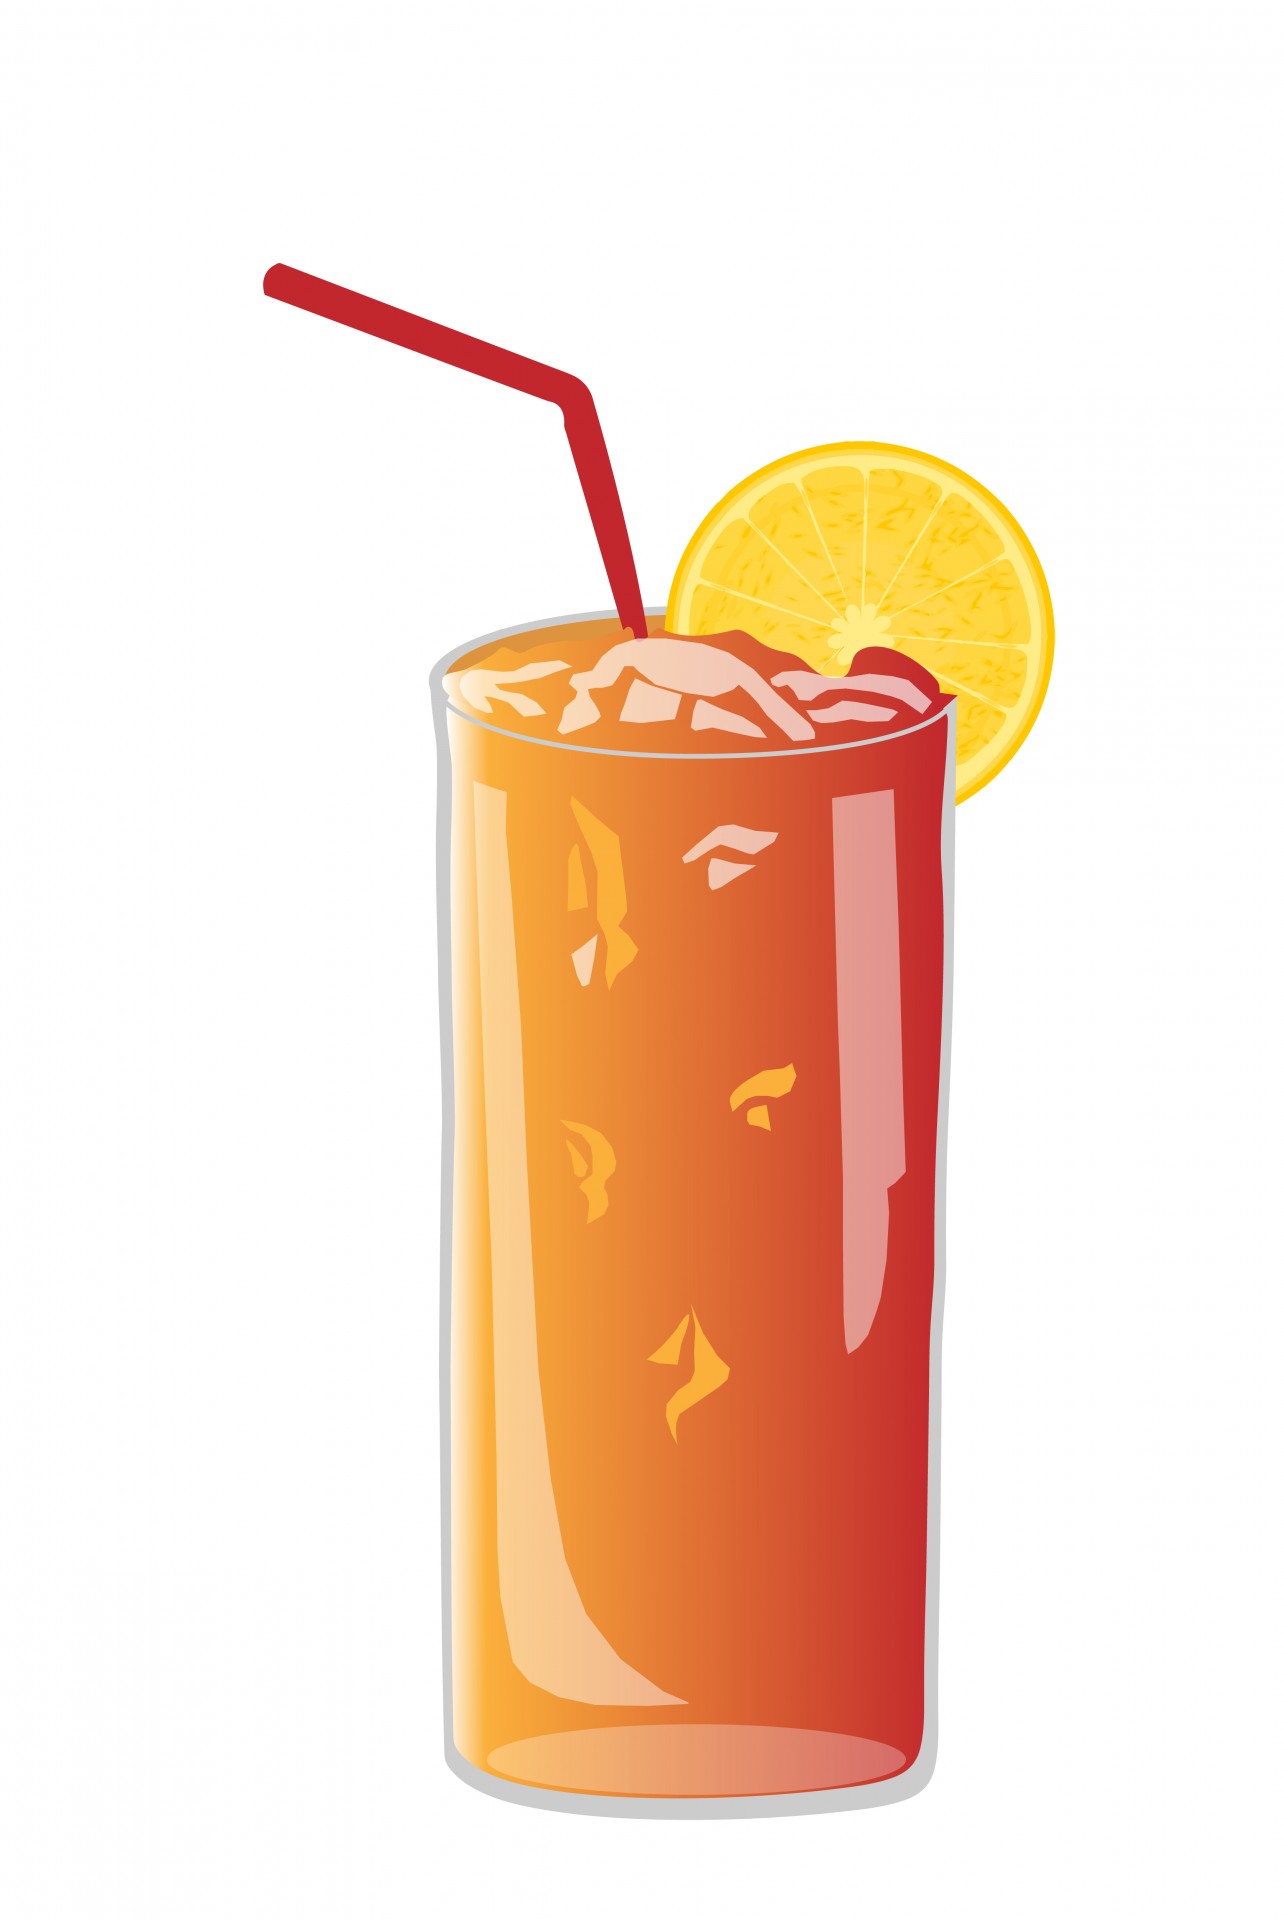 free clipart glass of orange juice - photo #34